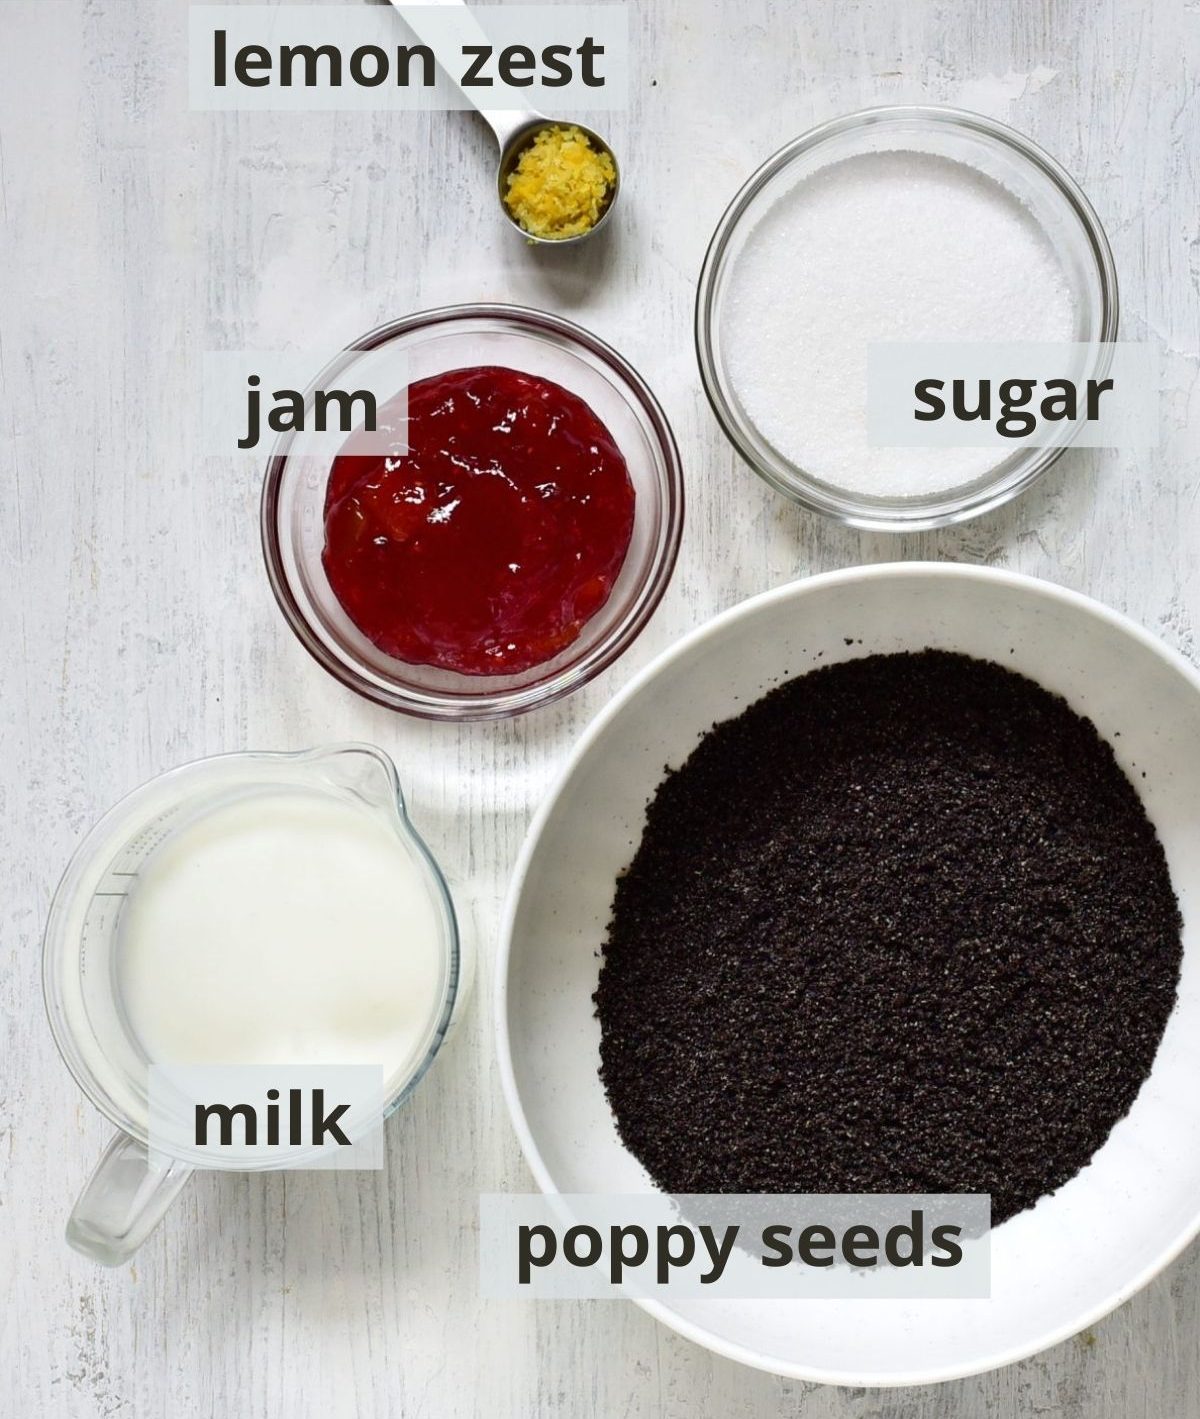 Ingredients for homemade poppyseed filling.